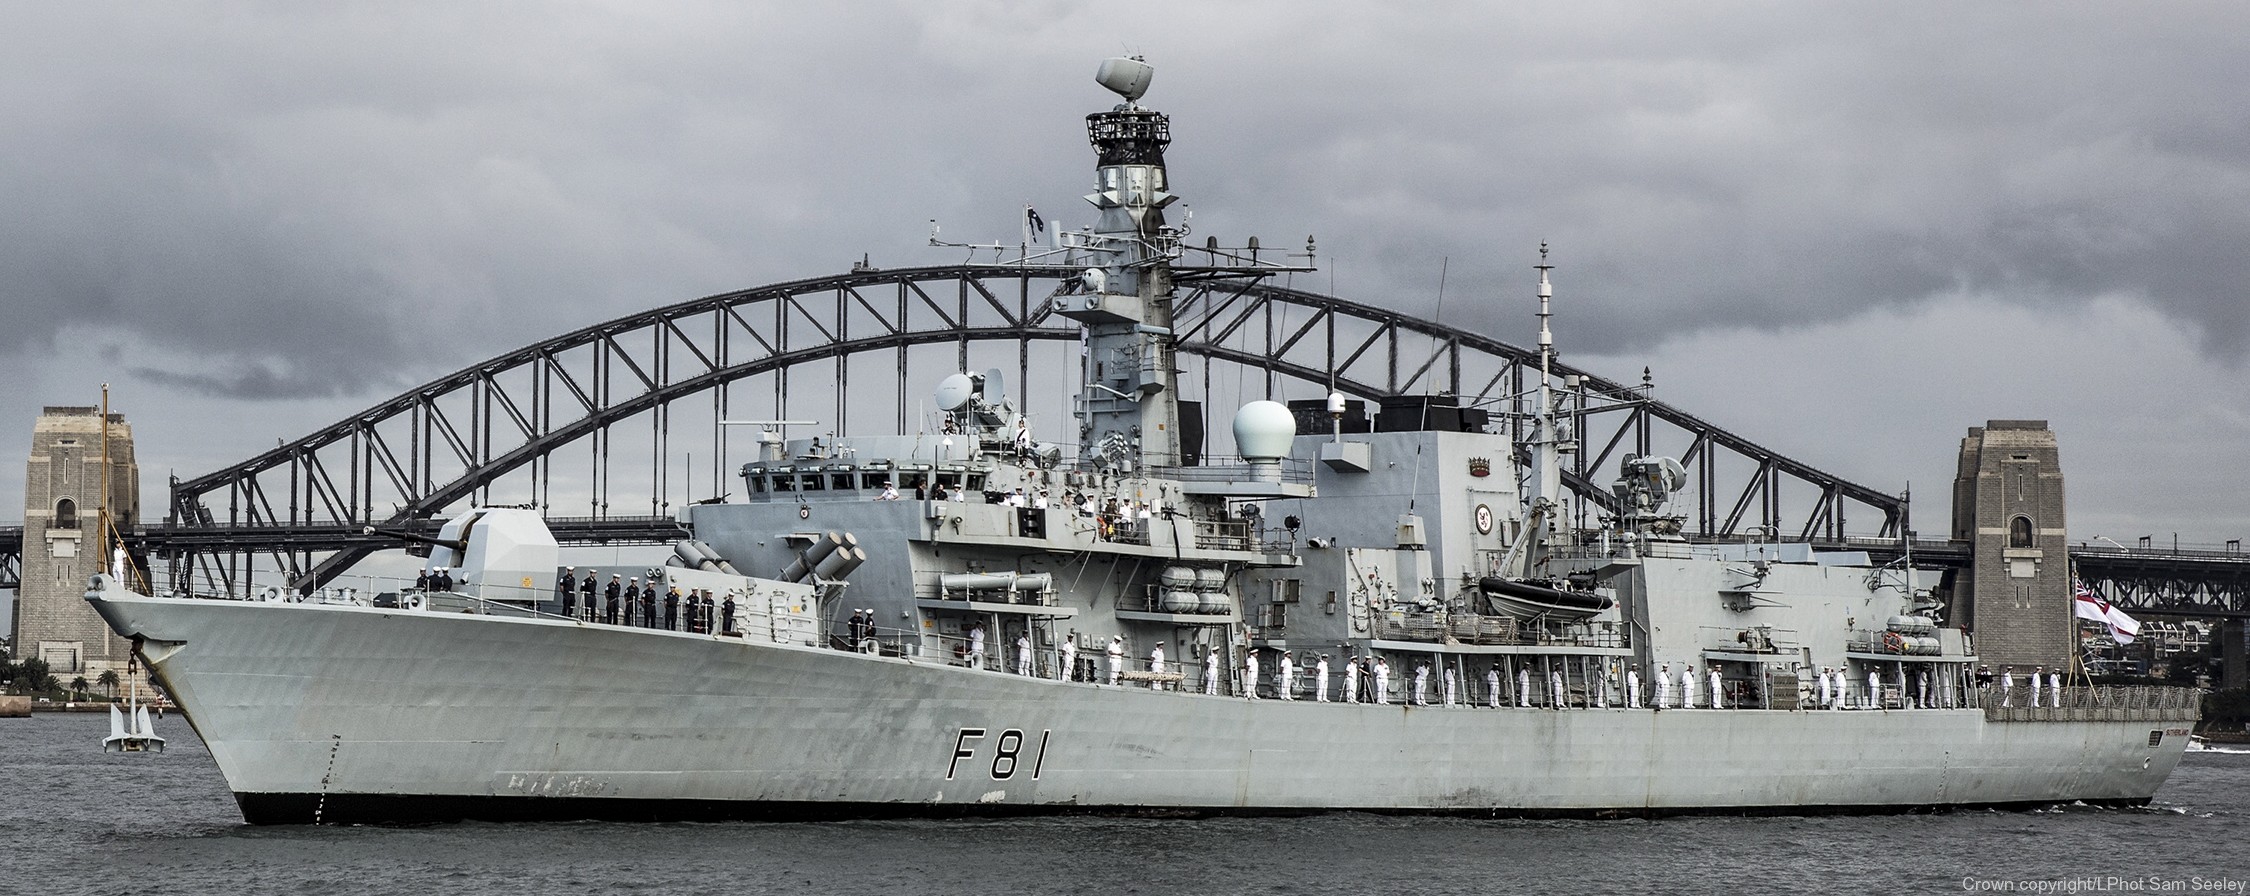 f-81 hms sutherland type 23 duke class guided missile frigate ffg royal navy 41 sydney australia